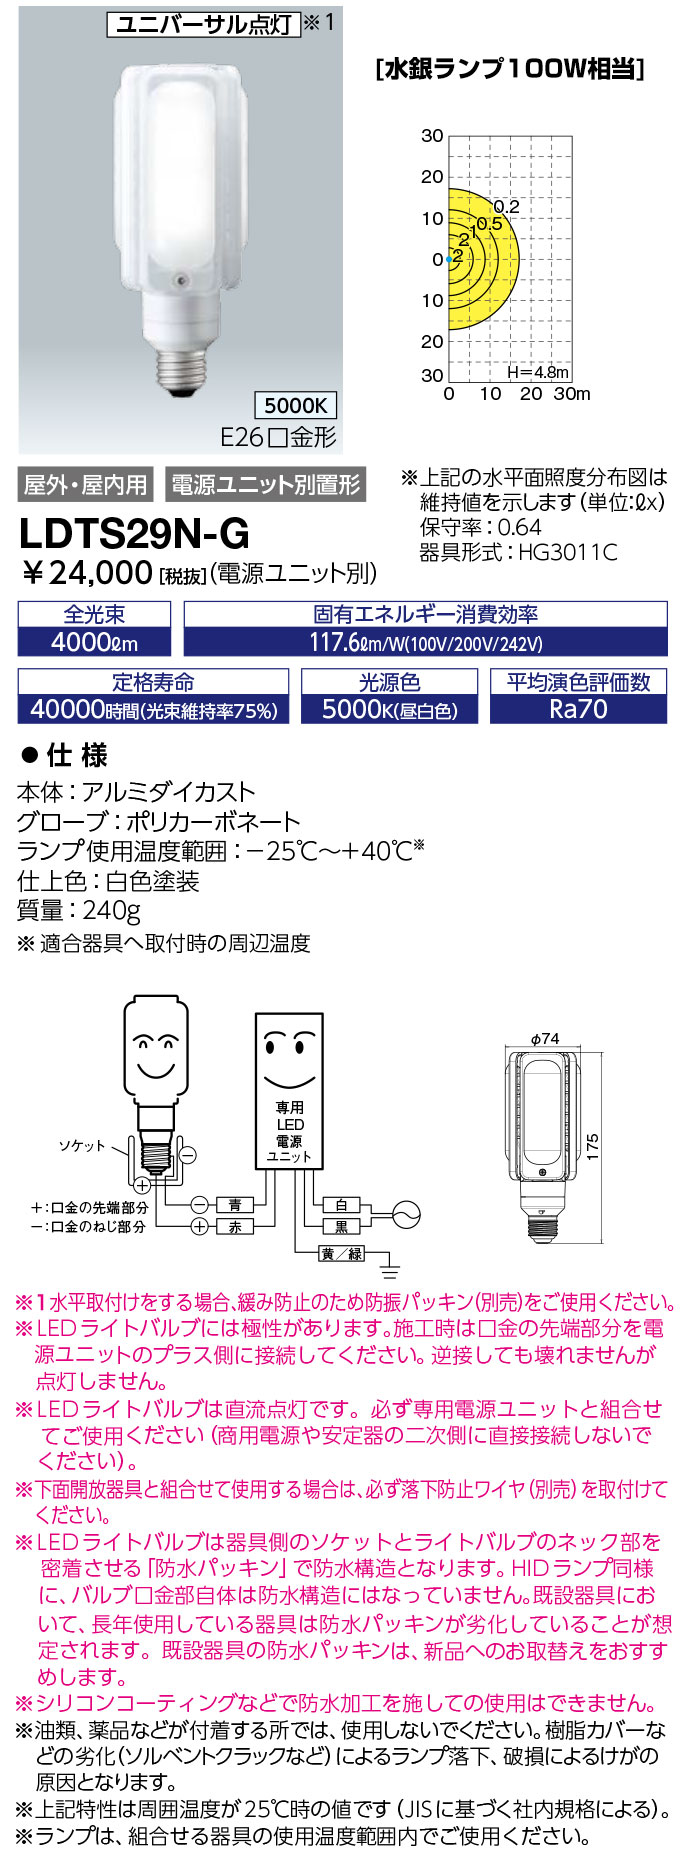 LDTS29N-G | ランプ | レディオック LEDライトバルブ水銀ランプ100W 